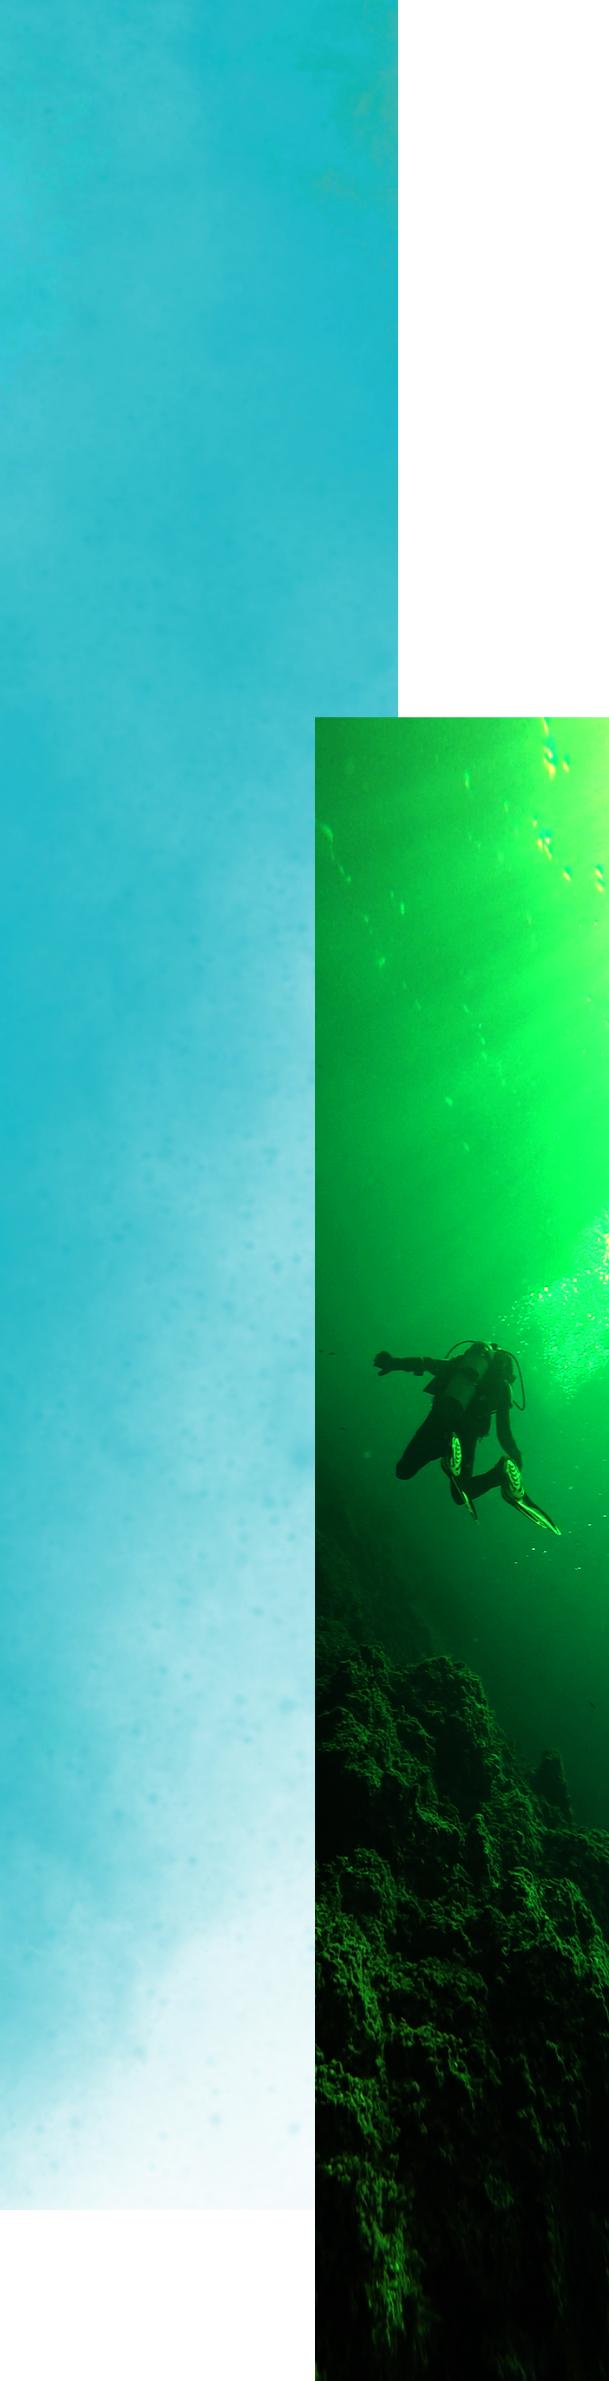 Scuba diver close to underwater rocks